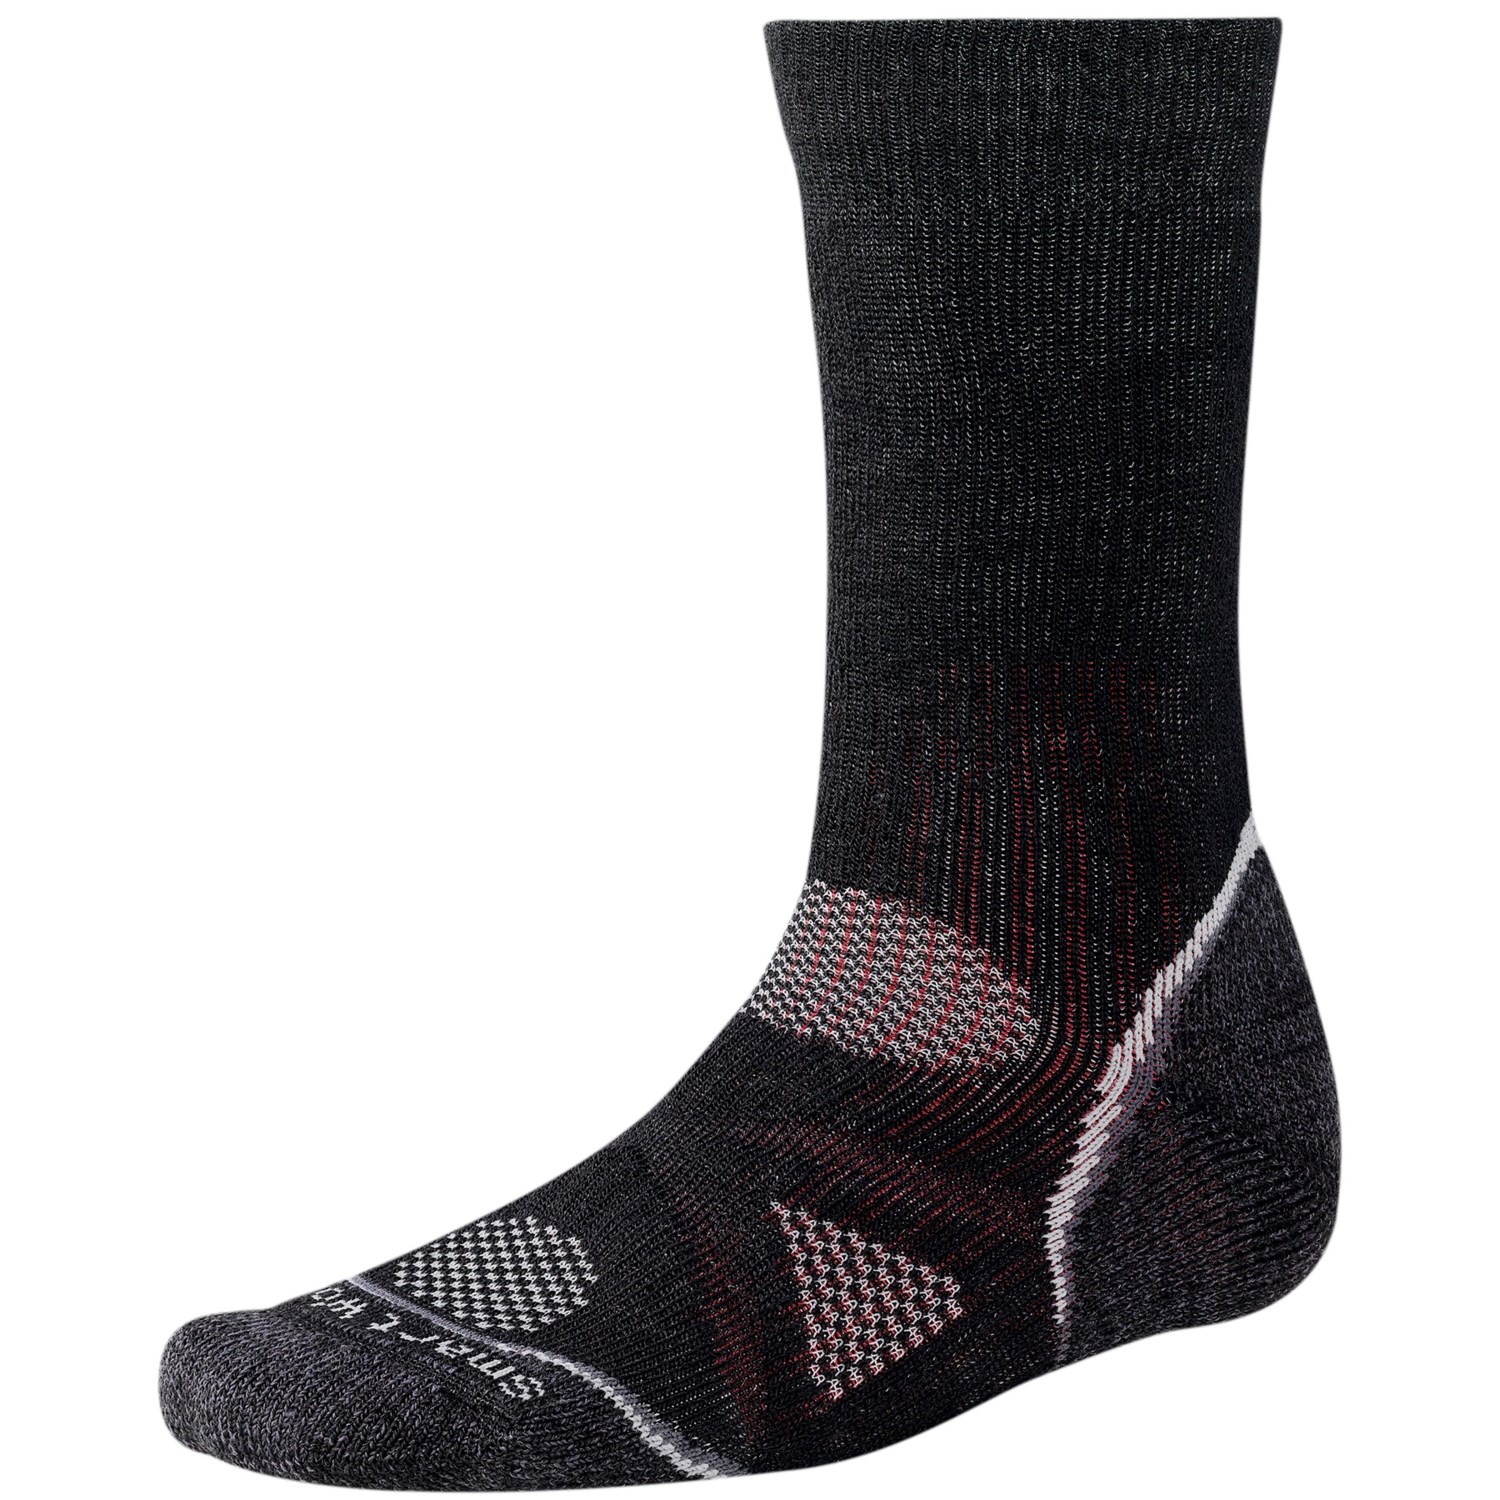 SmartWool PhD Outdoor Heavy Socks For Men and Women